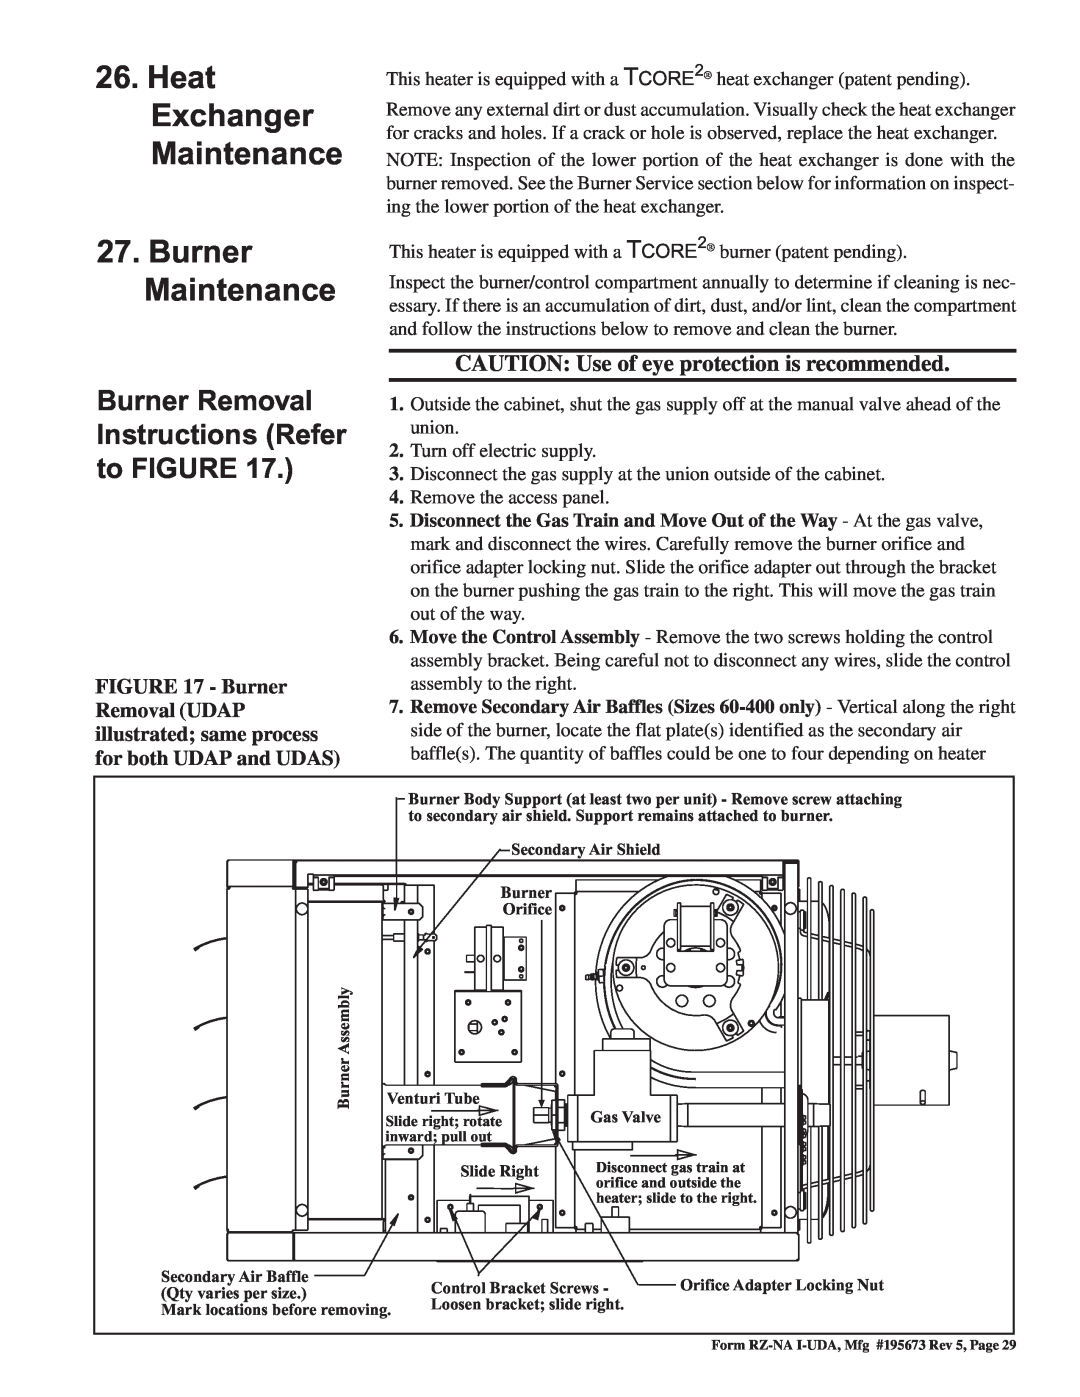 Thomas & Betts UDAP, UDAS Heat Exchanger Maintenance, Burner Maintenance, Burner Removal Instructions Refer to FIGURE 